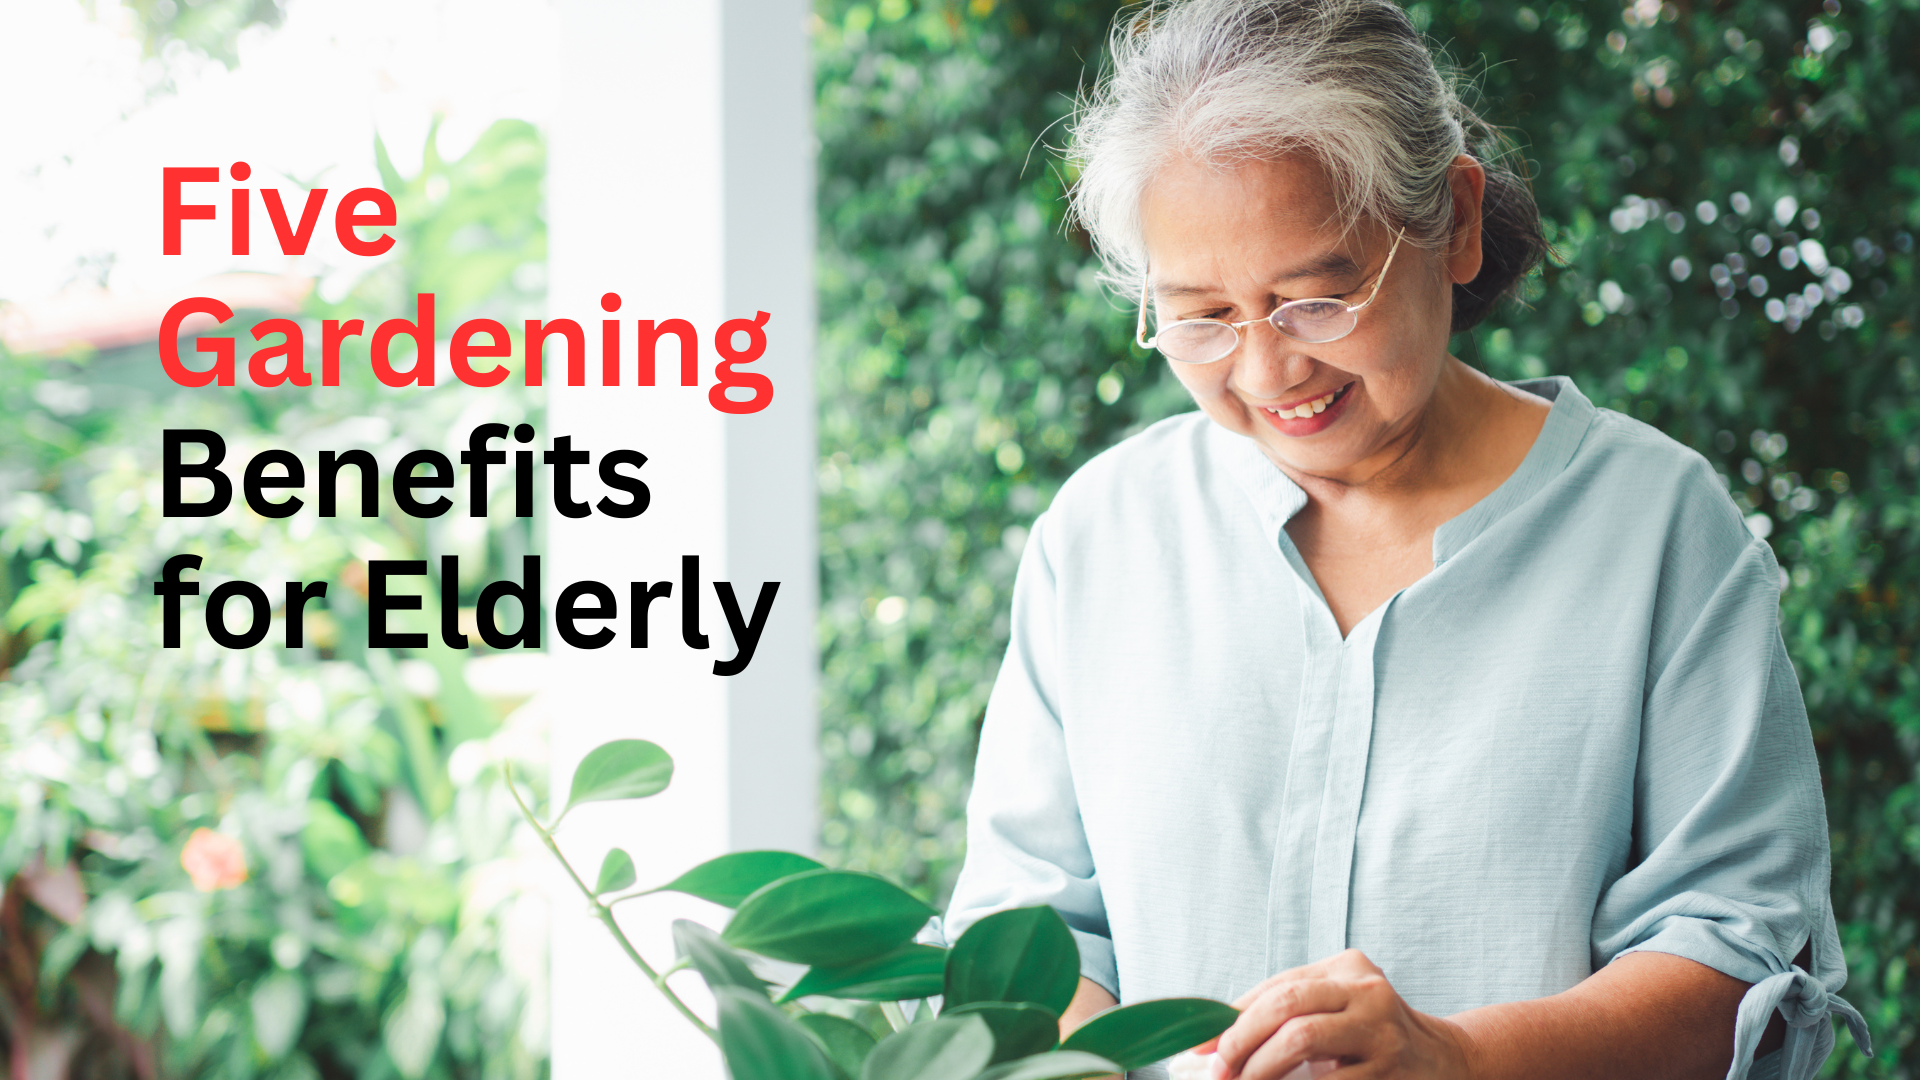 Five Gardening Benefits for Elderly